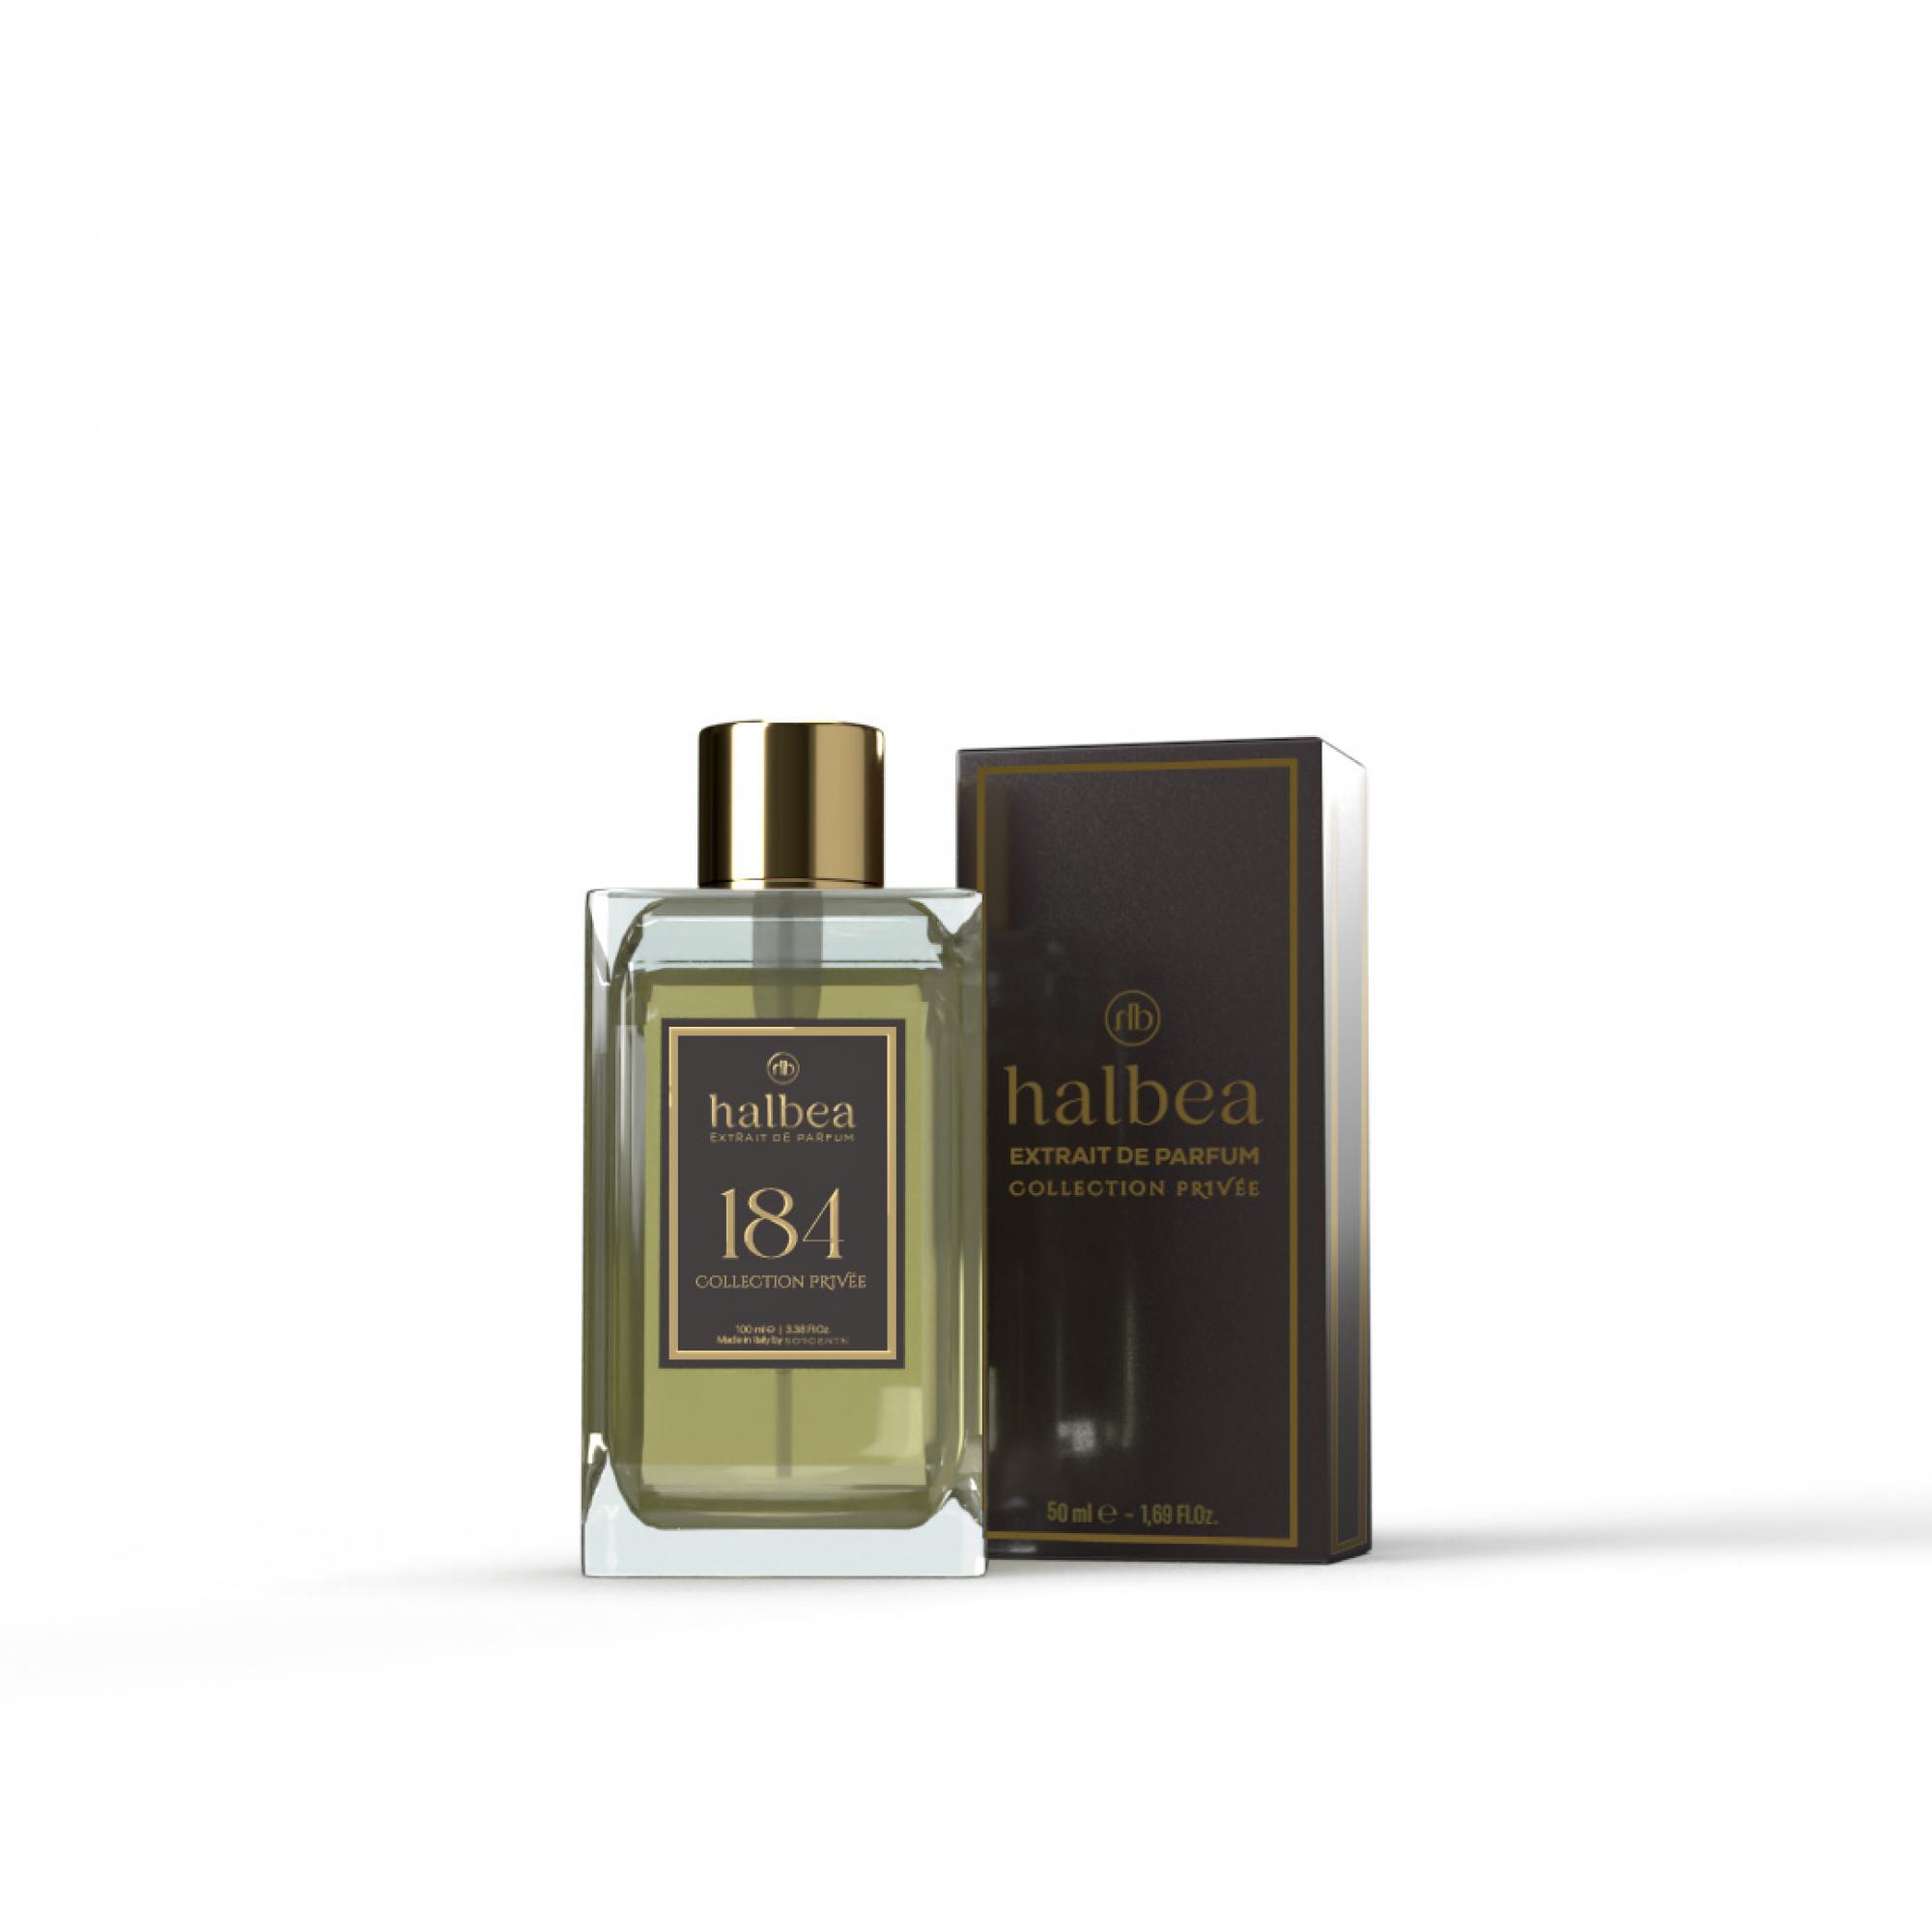 Halbea Parfum Nr. 184 insp. by Morph Nudo 50ml